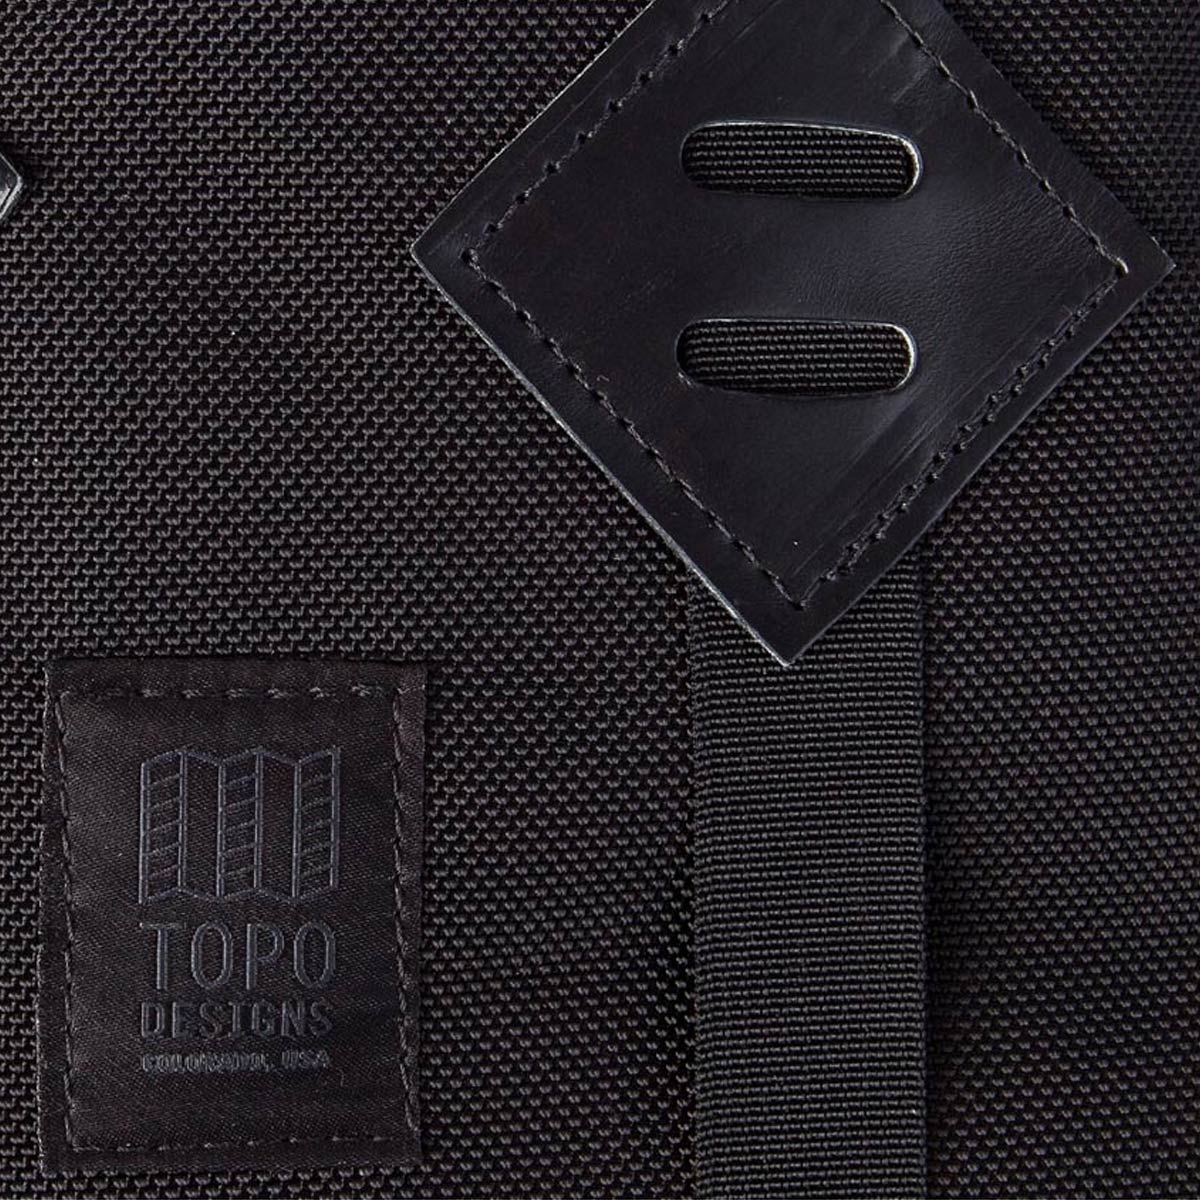 Topo Designs Klettersack Ballistic/Black Leather Lifestyle, ballistic backpack for men and women